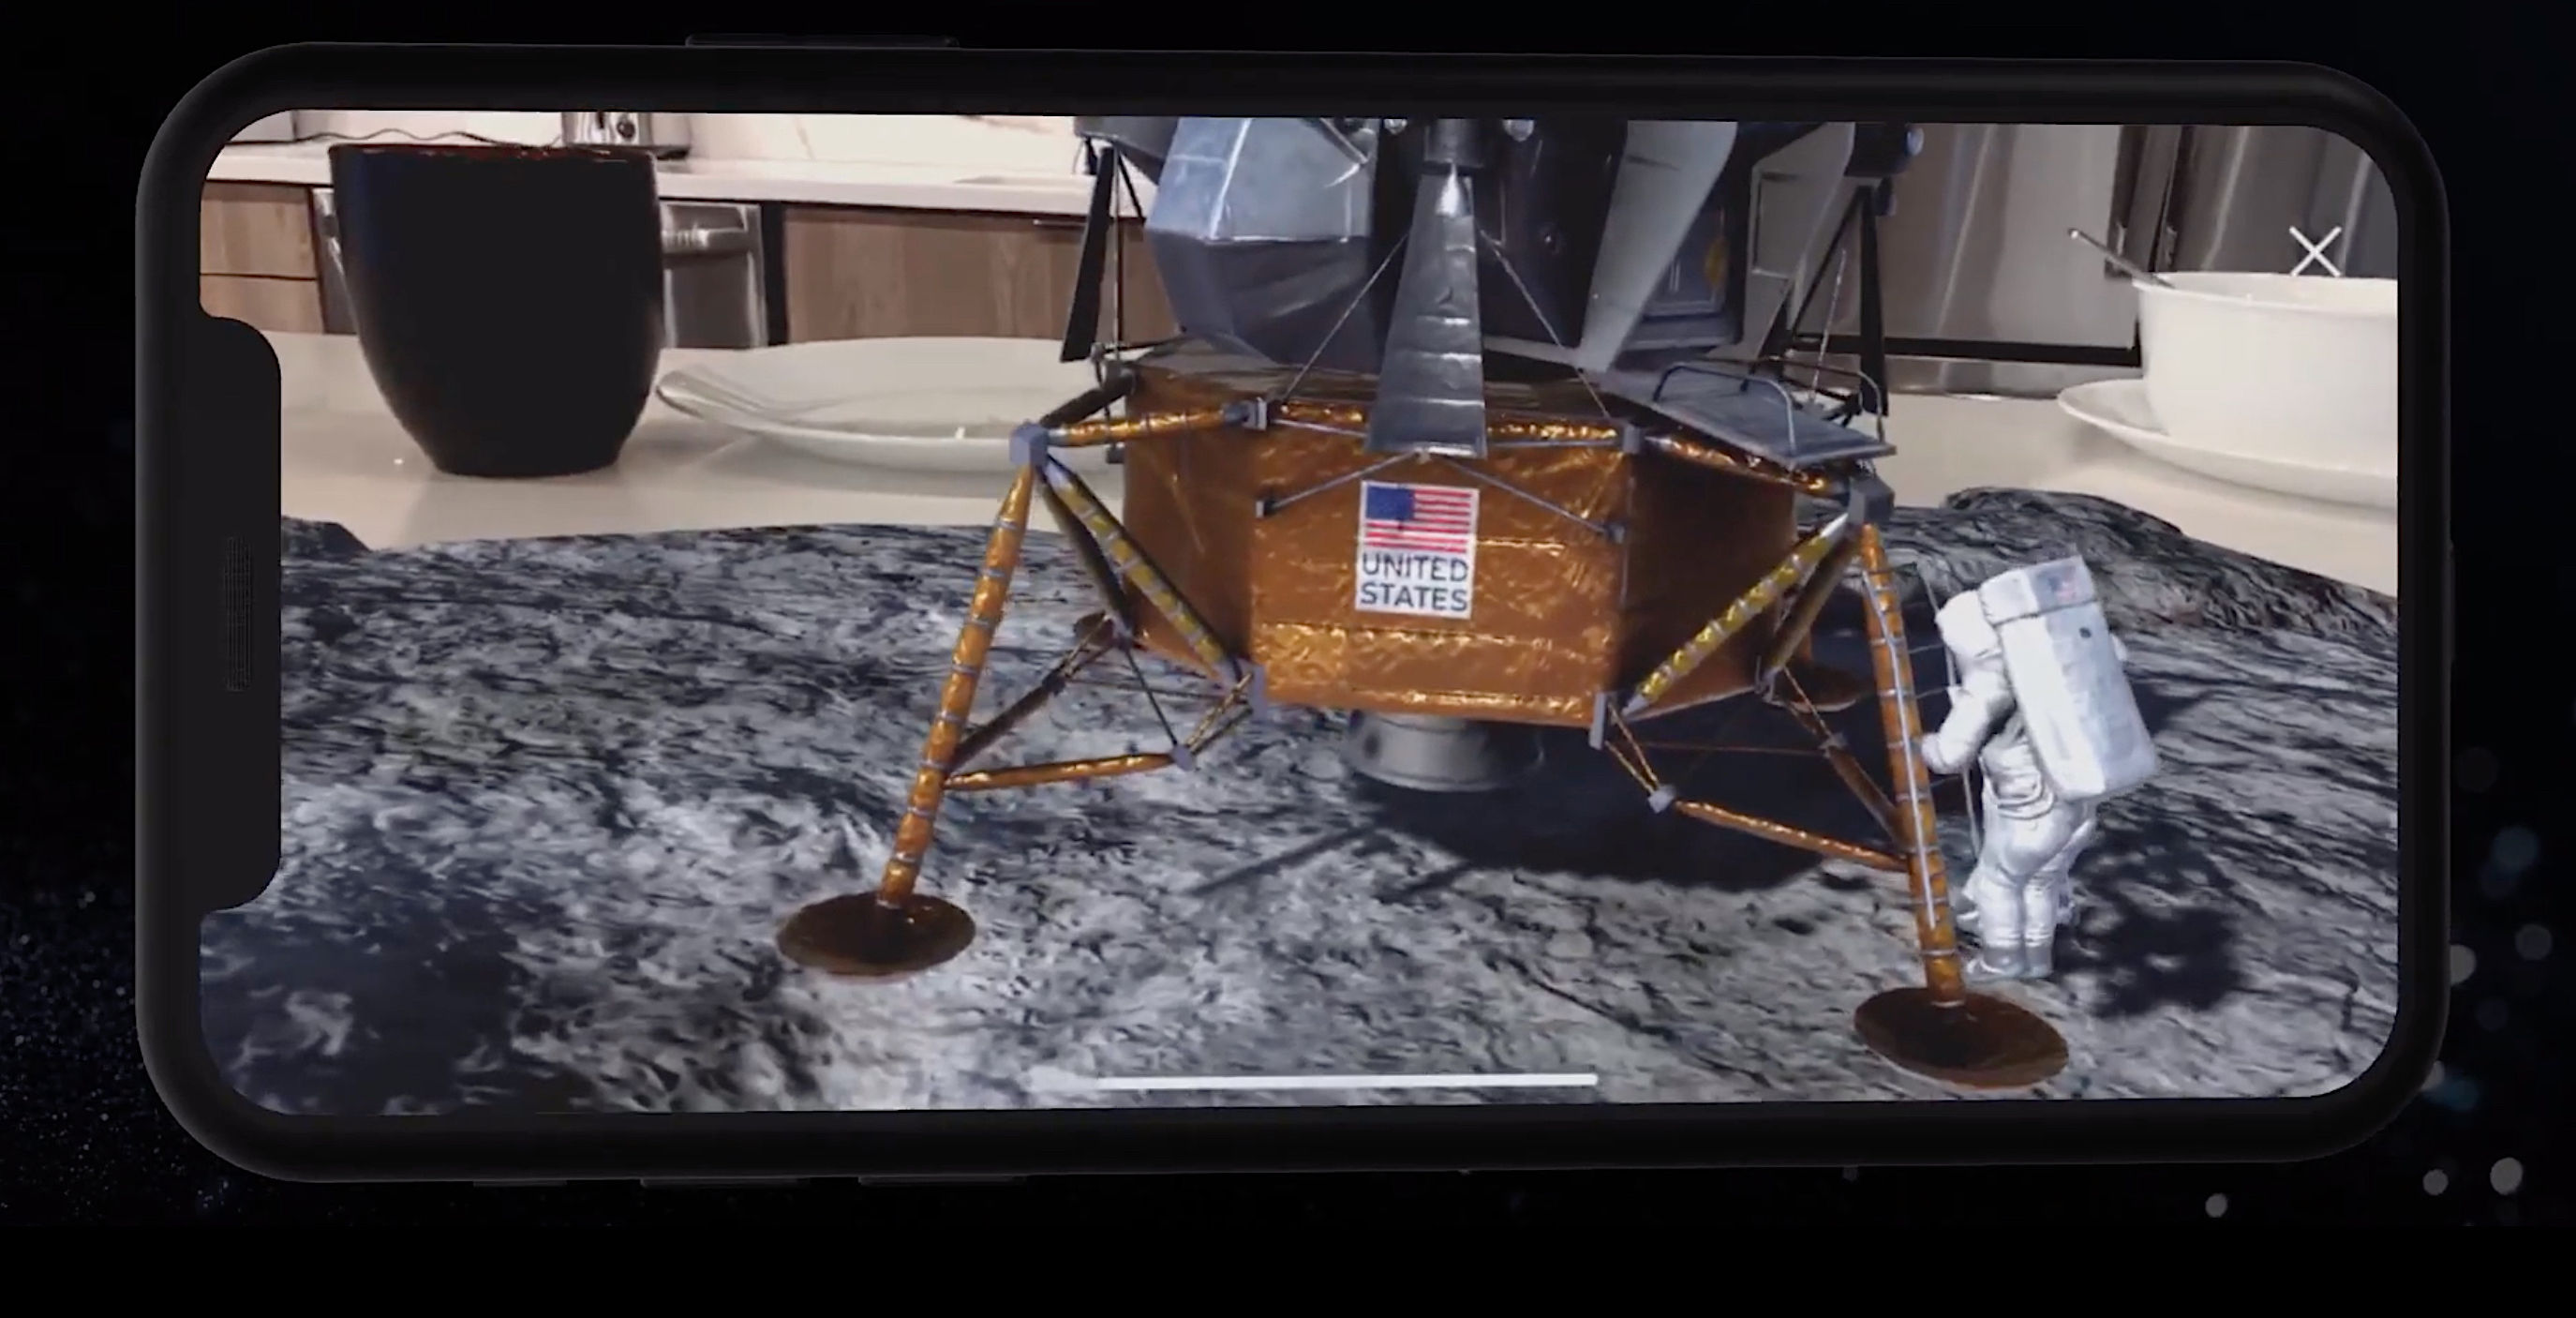 Moonshot mobile app recreates the Apollo 11 moon landing